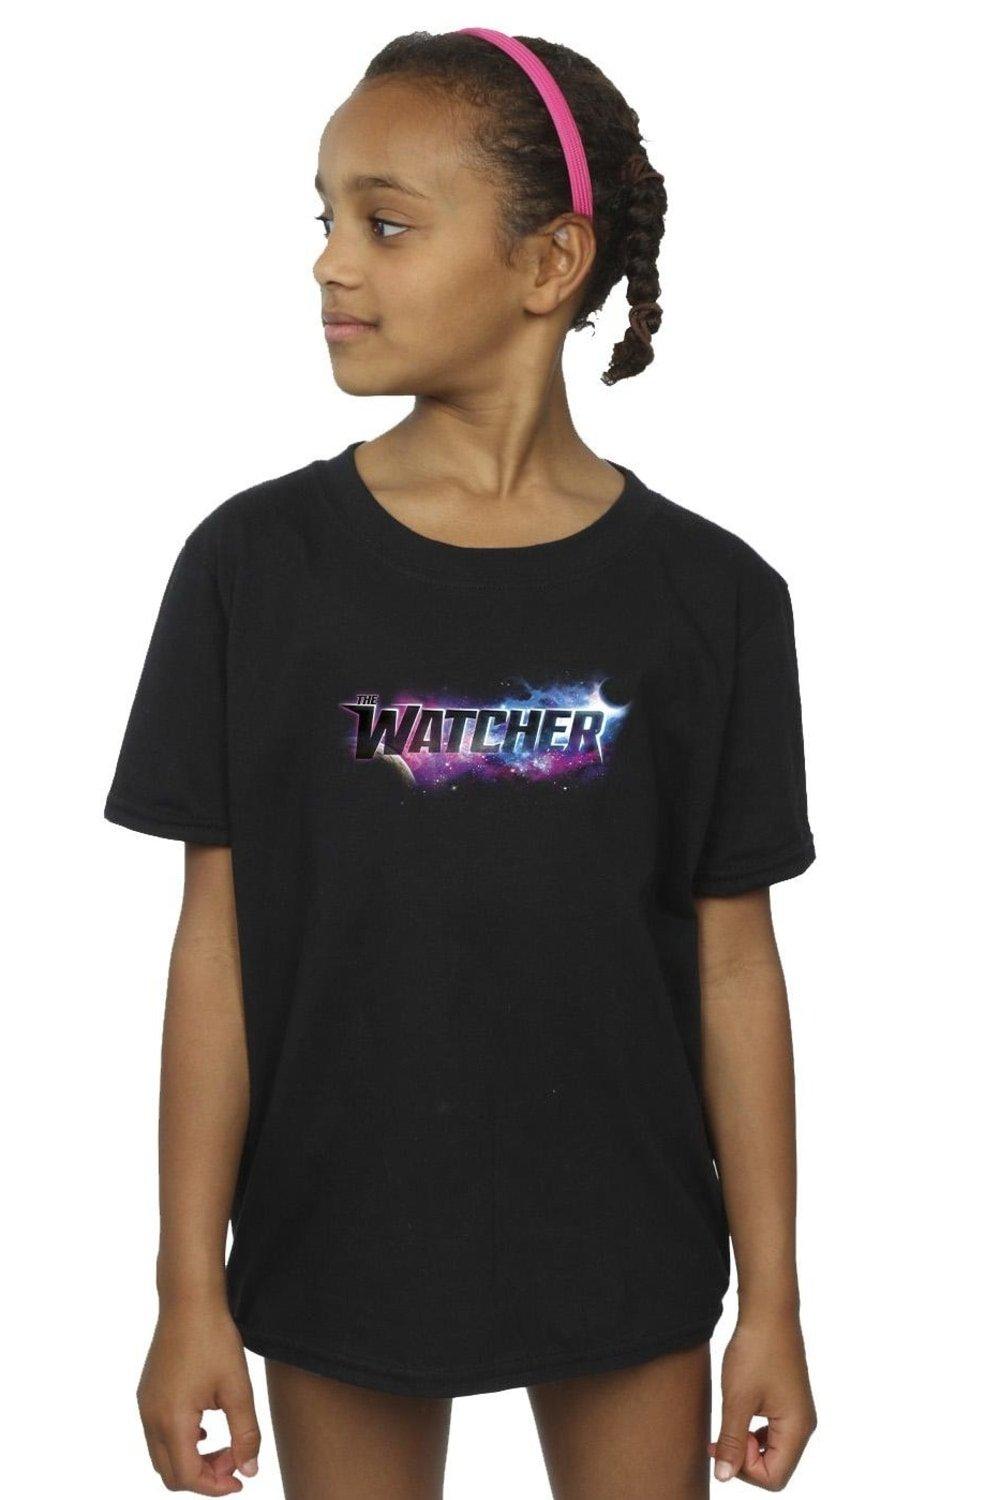 What If Watcher Cotton T-Shirt